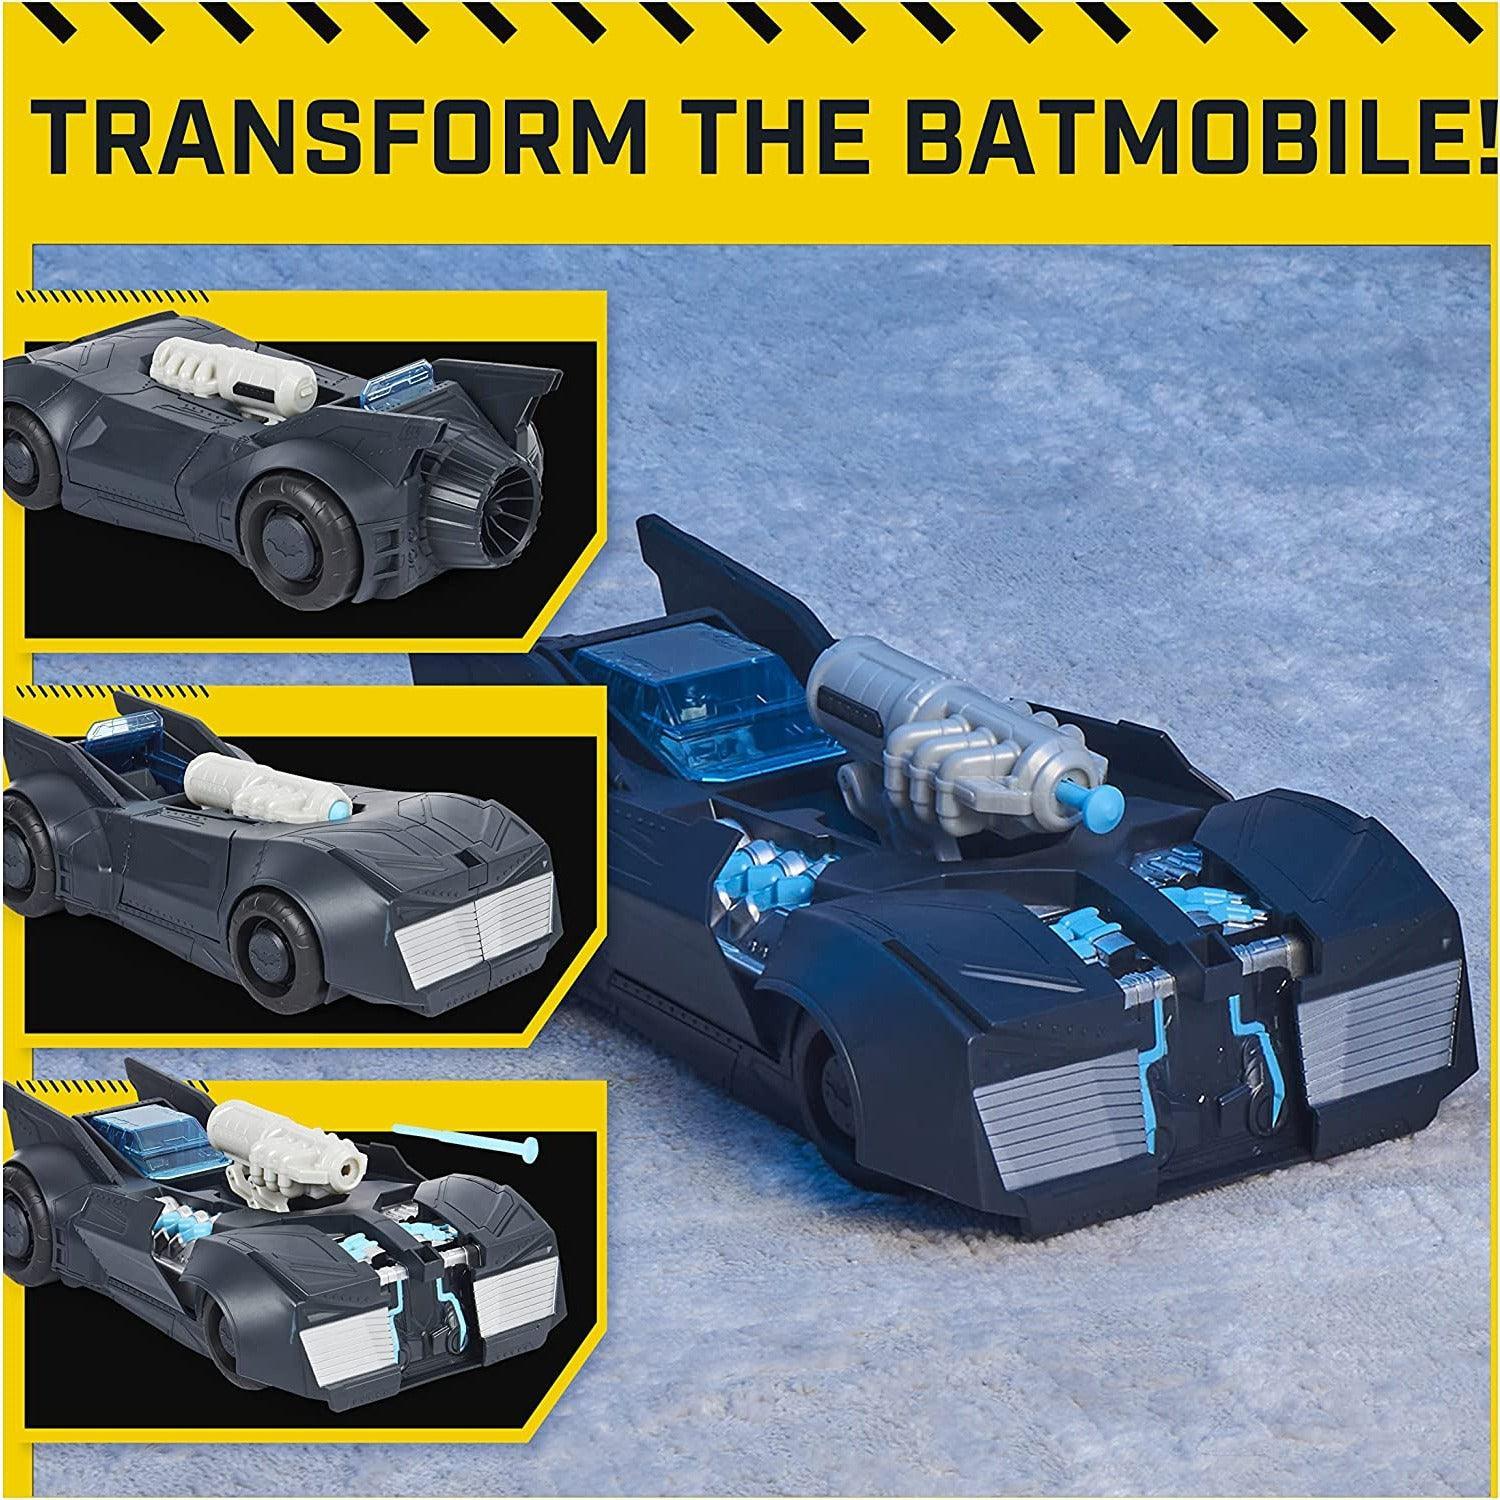 DC Comics Batman, Tech Defender Batmobile, Transforming Vehicle with Blaster Launcher - BumbleToys - 5-7 Years, Action Battling, Arabic Triangle Trading, Batman, Boys, DC, DC Comics